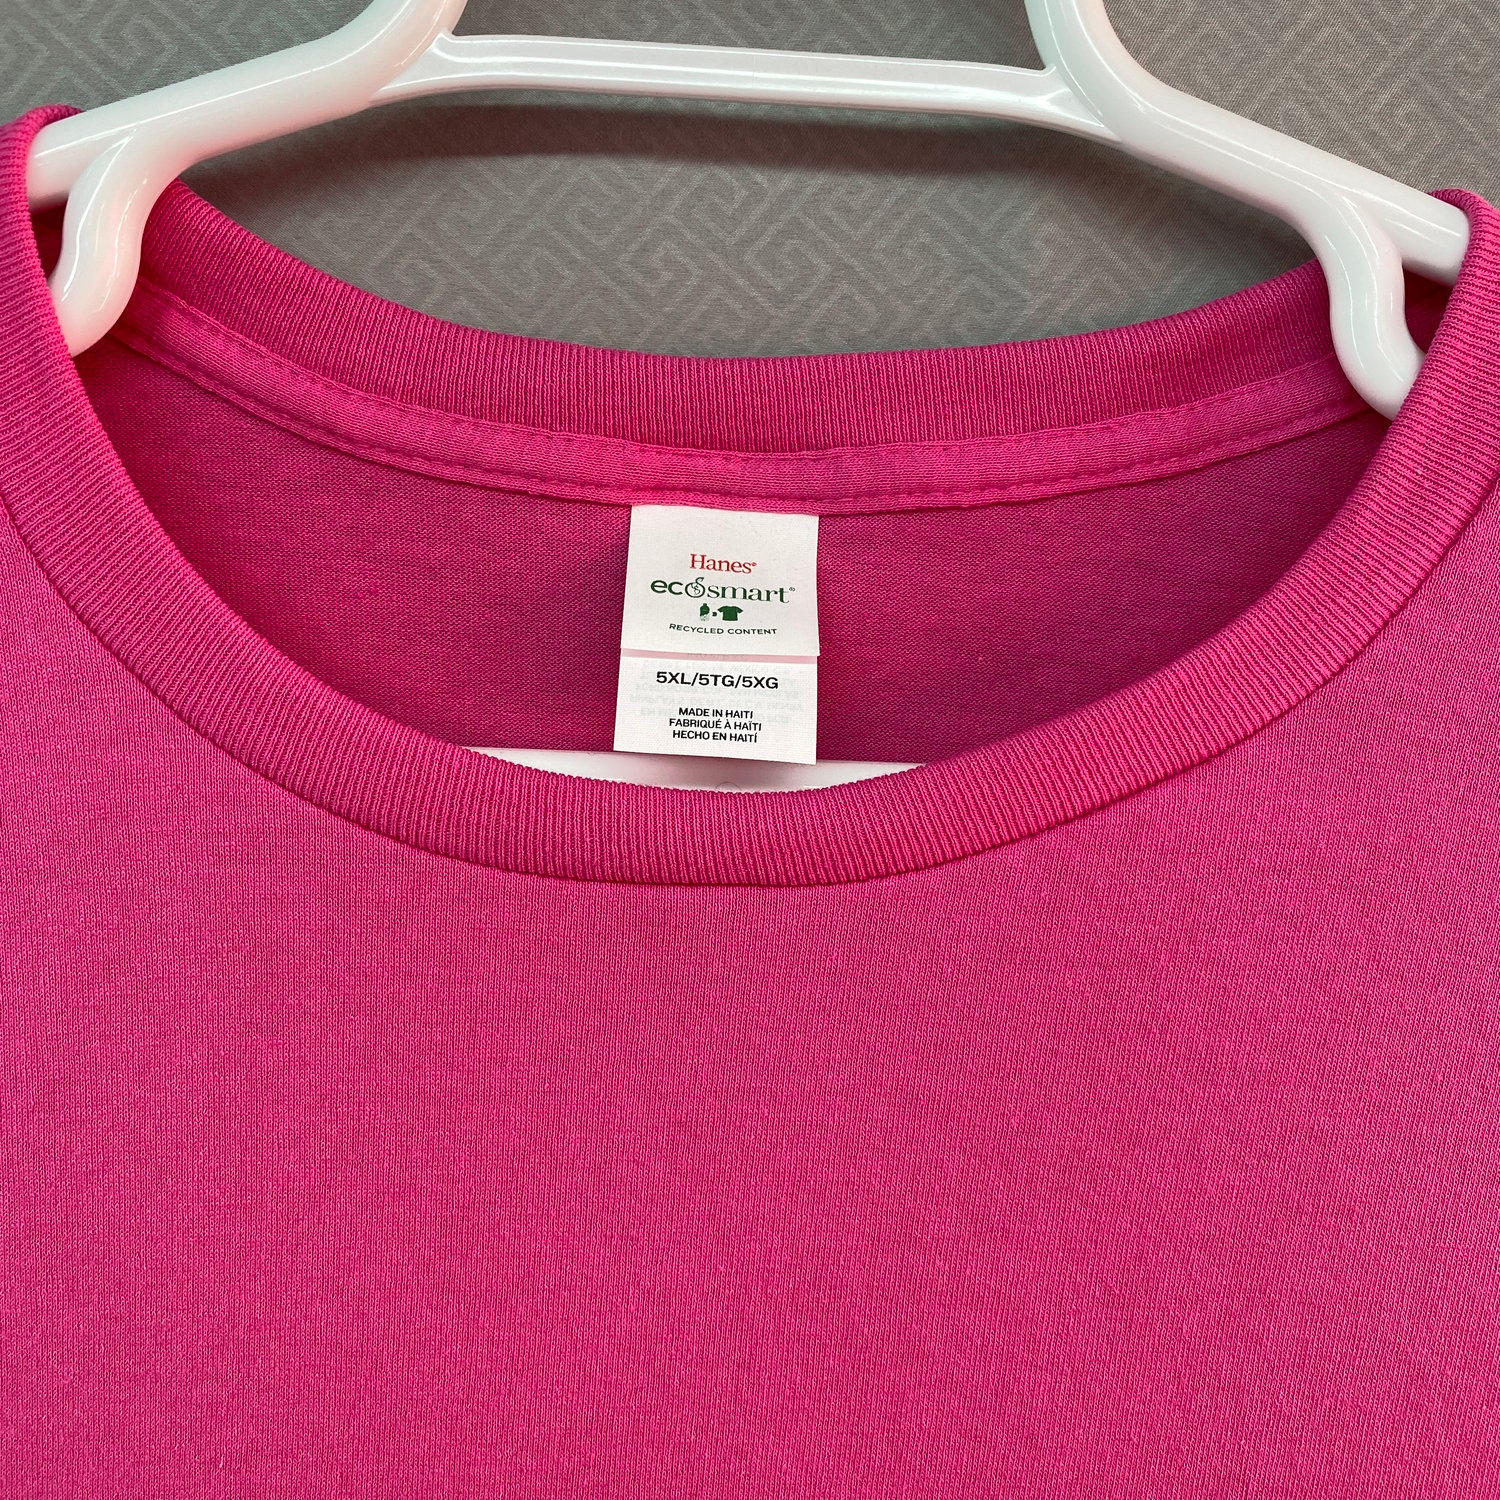 Image of 6 Pack 5X Pink Basic Hanes Tee Shirts